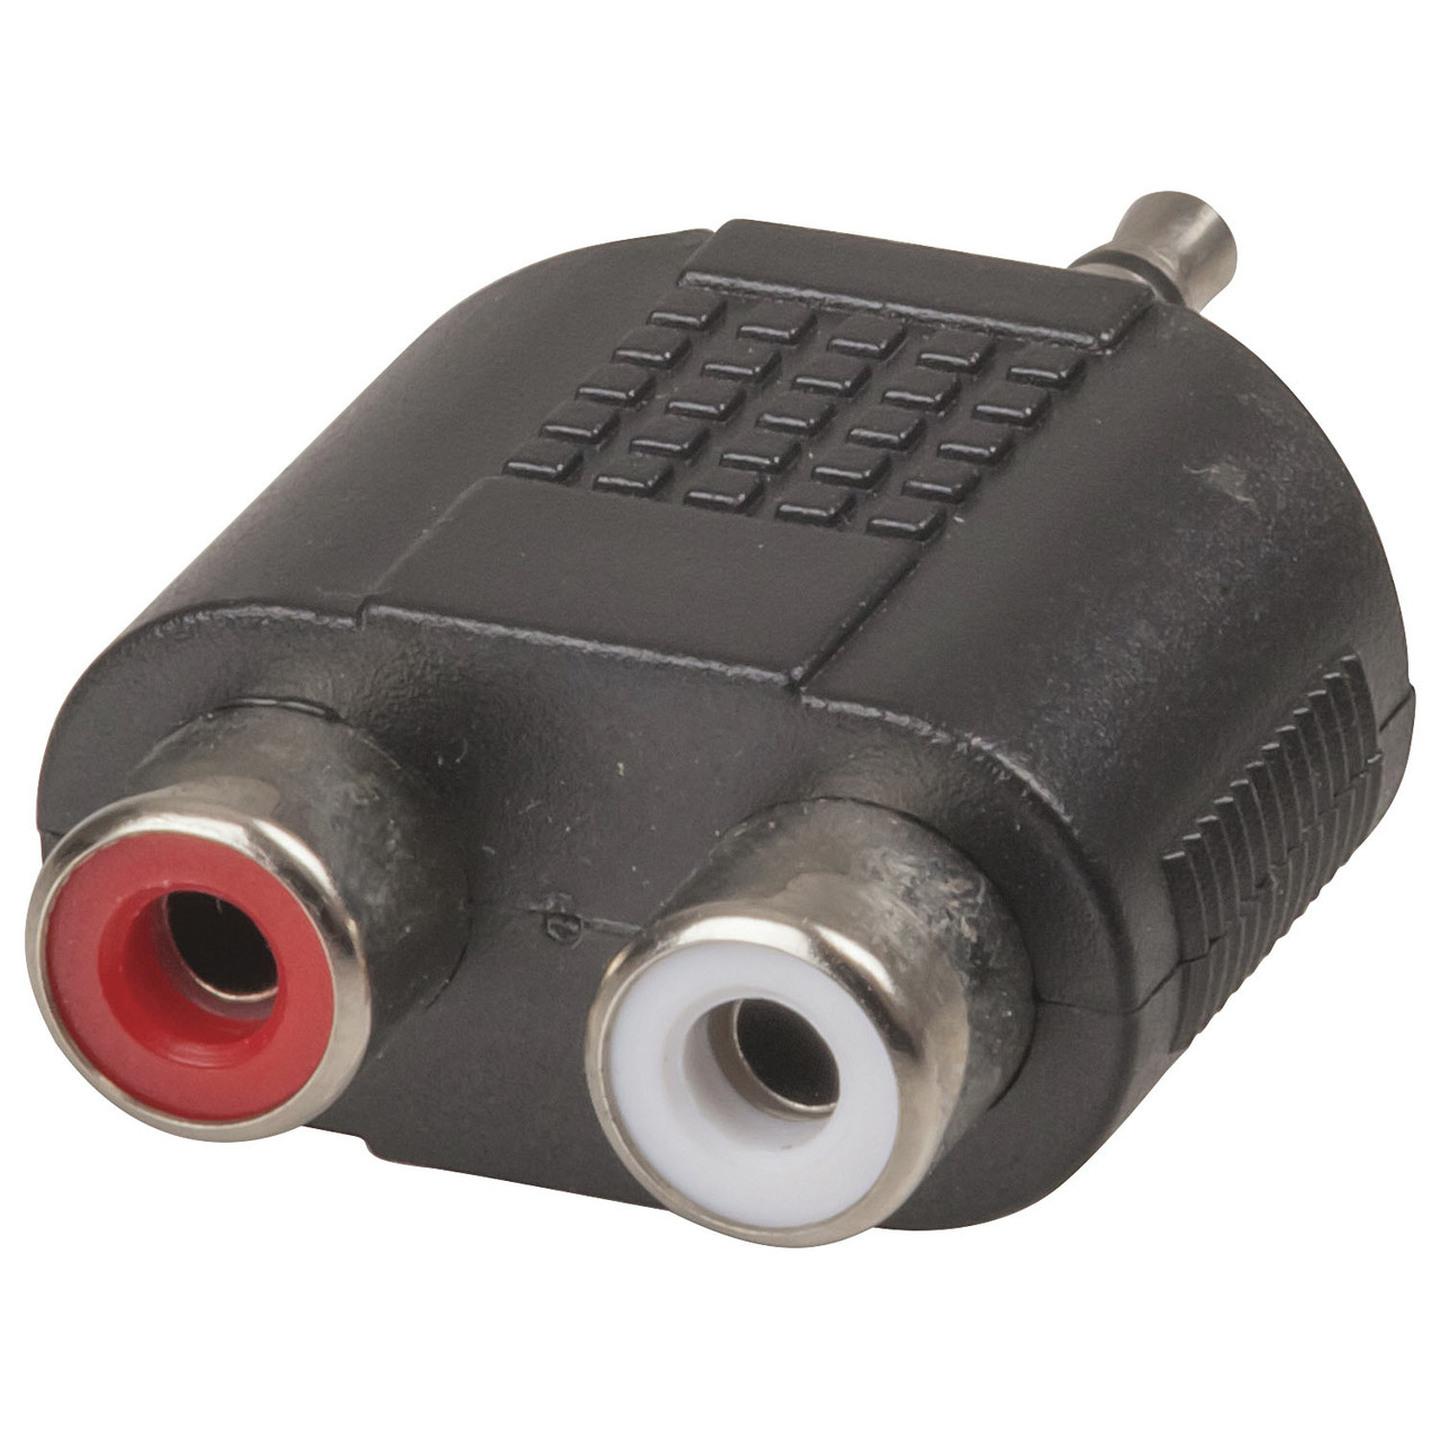 3.5mm Stereo Plug to 2 RCA Sockets Adaptor